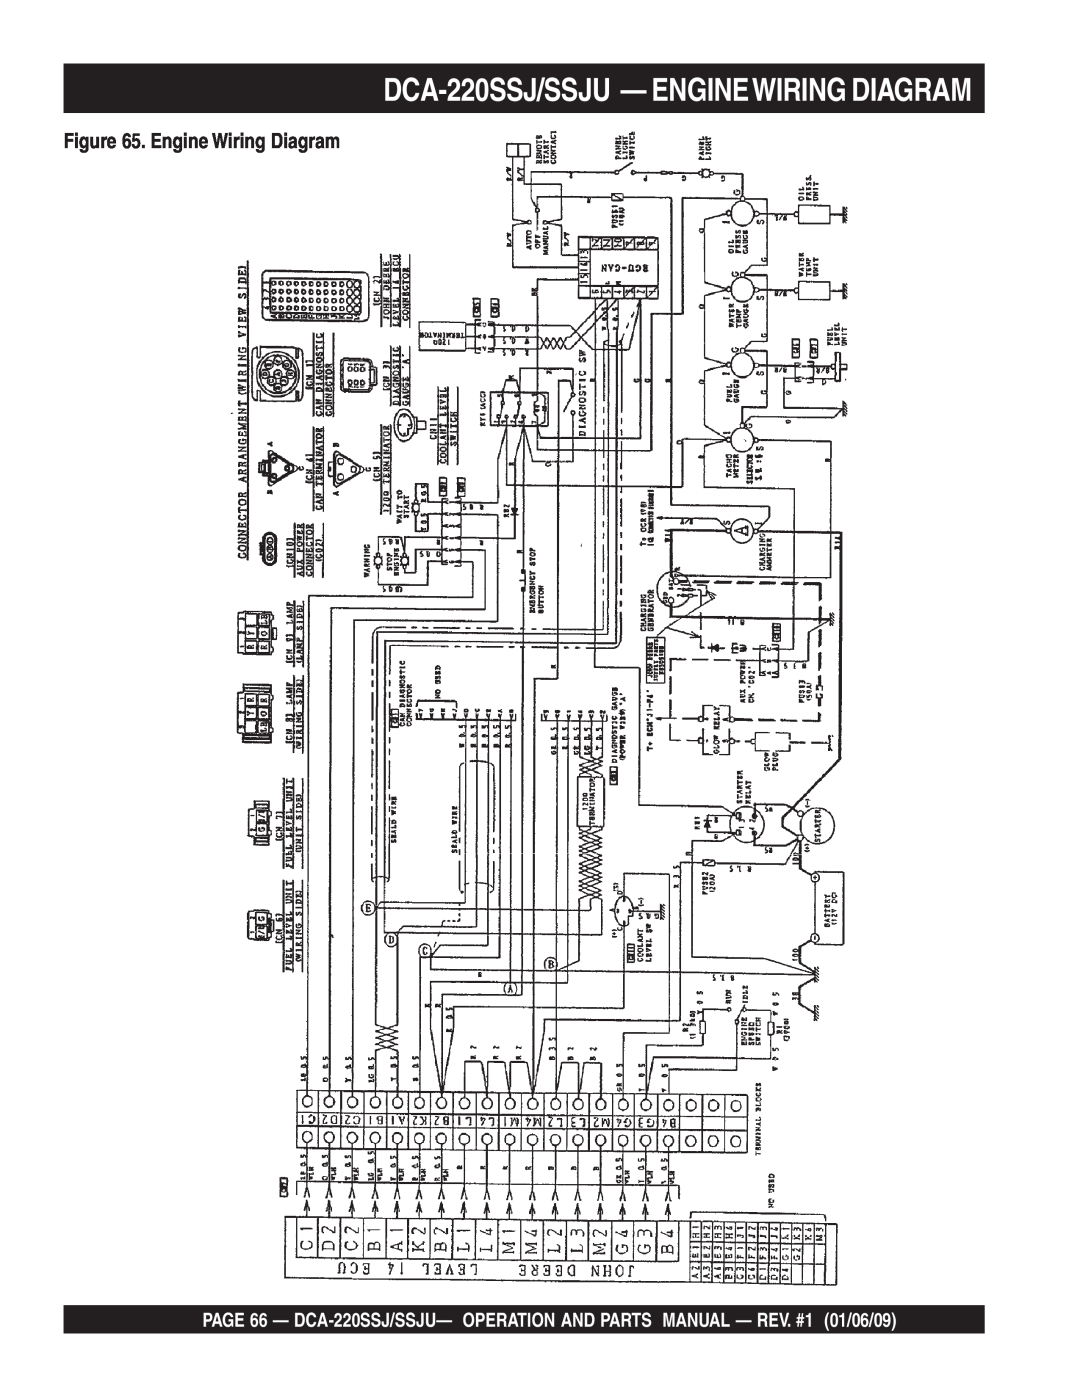 Multiquip operation manual DCA-220SSJ/SSJU - ENGINEWIRING DIAGRAM, Engine Wiring Diagram 